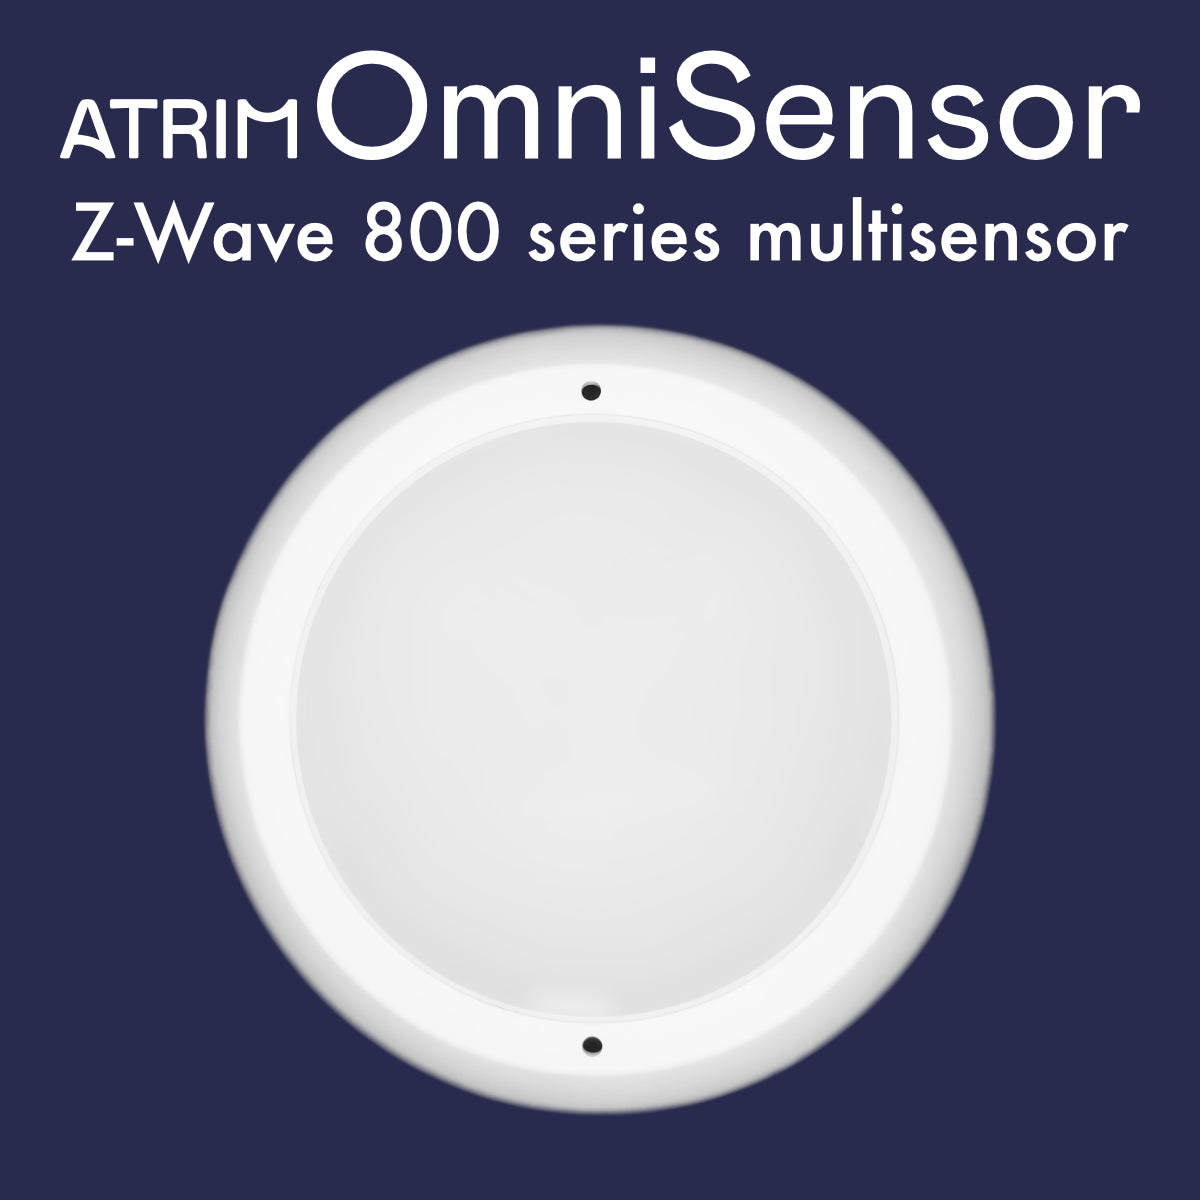 Z-Wave 800 series multisensor